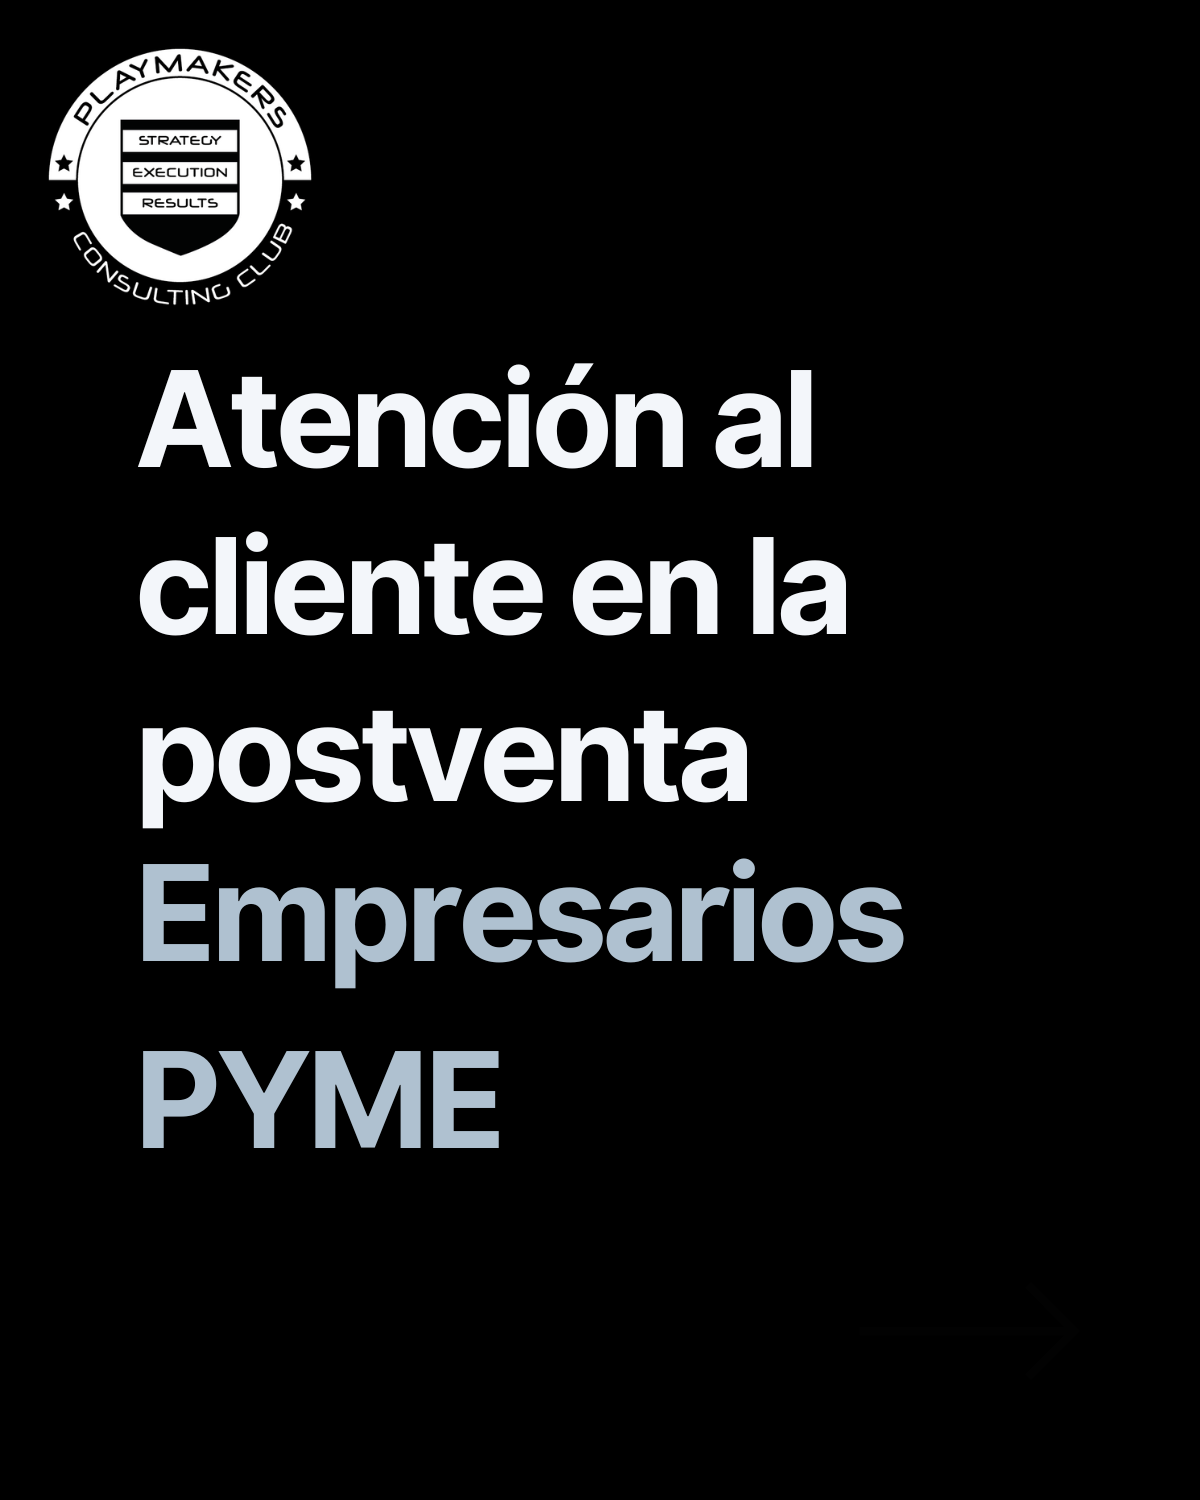 Atención al cliente para empresarios pyme en España